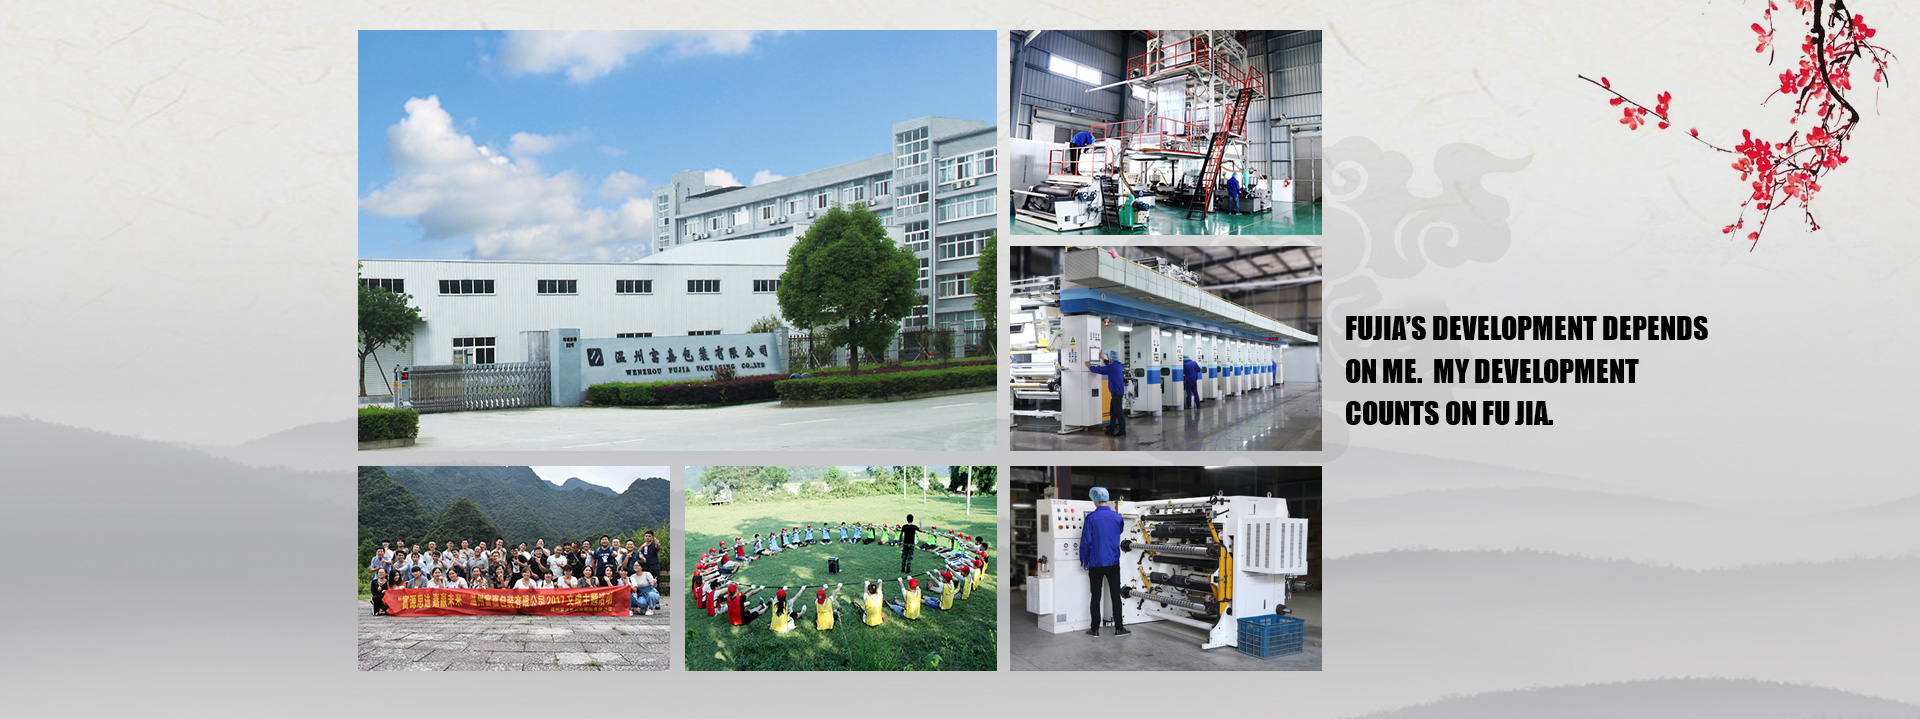 NingBo Fenghua Yu Ning Machinery Manufacturing Co.,Ltd.